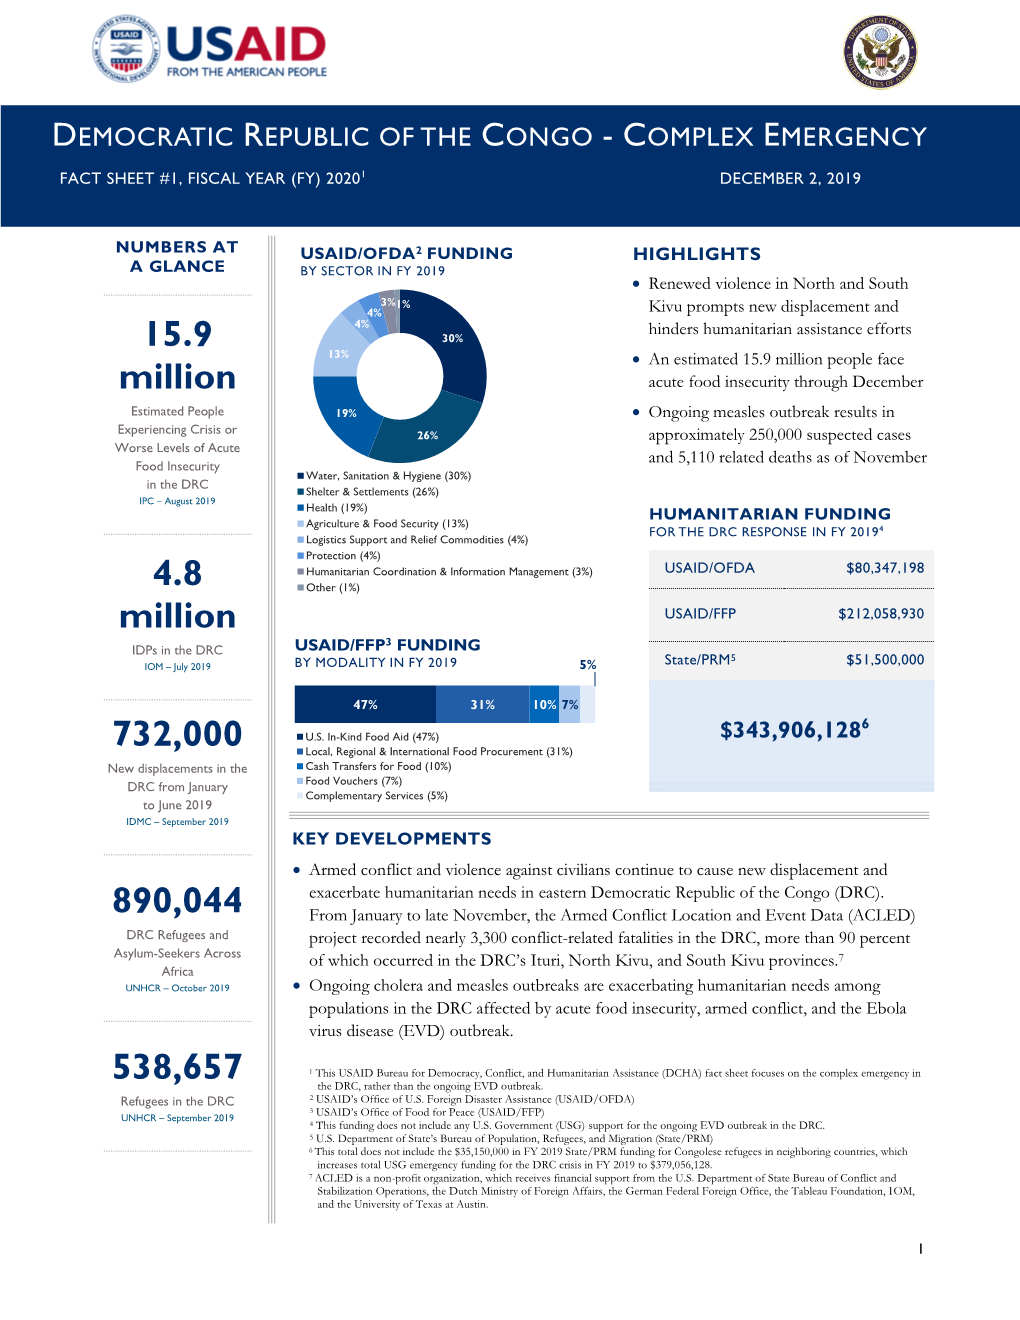 USAID-DCHA DRC Complex Emergency Fact Sheet